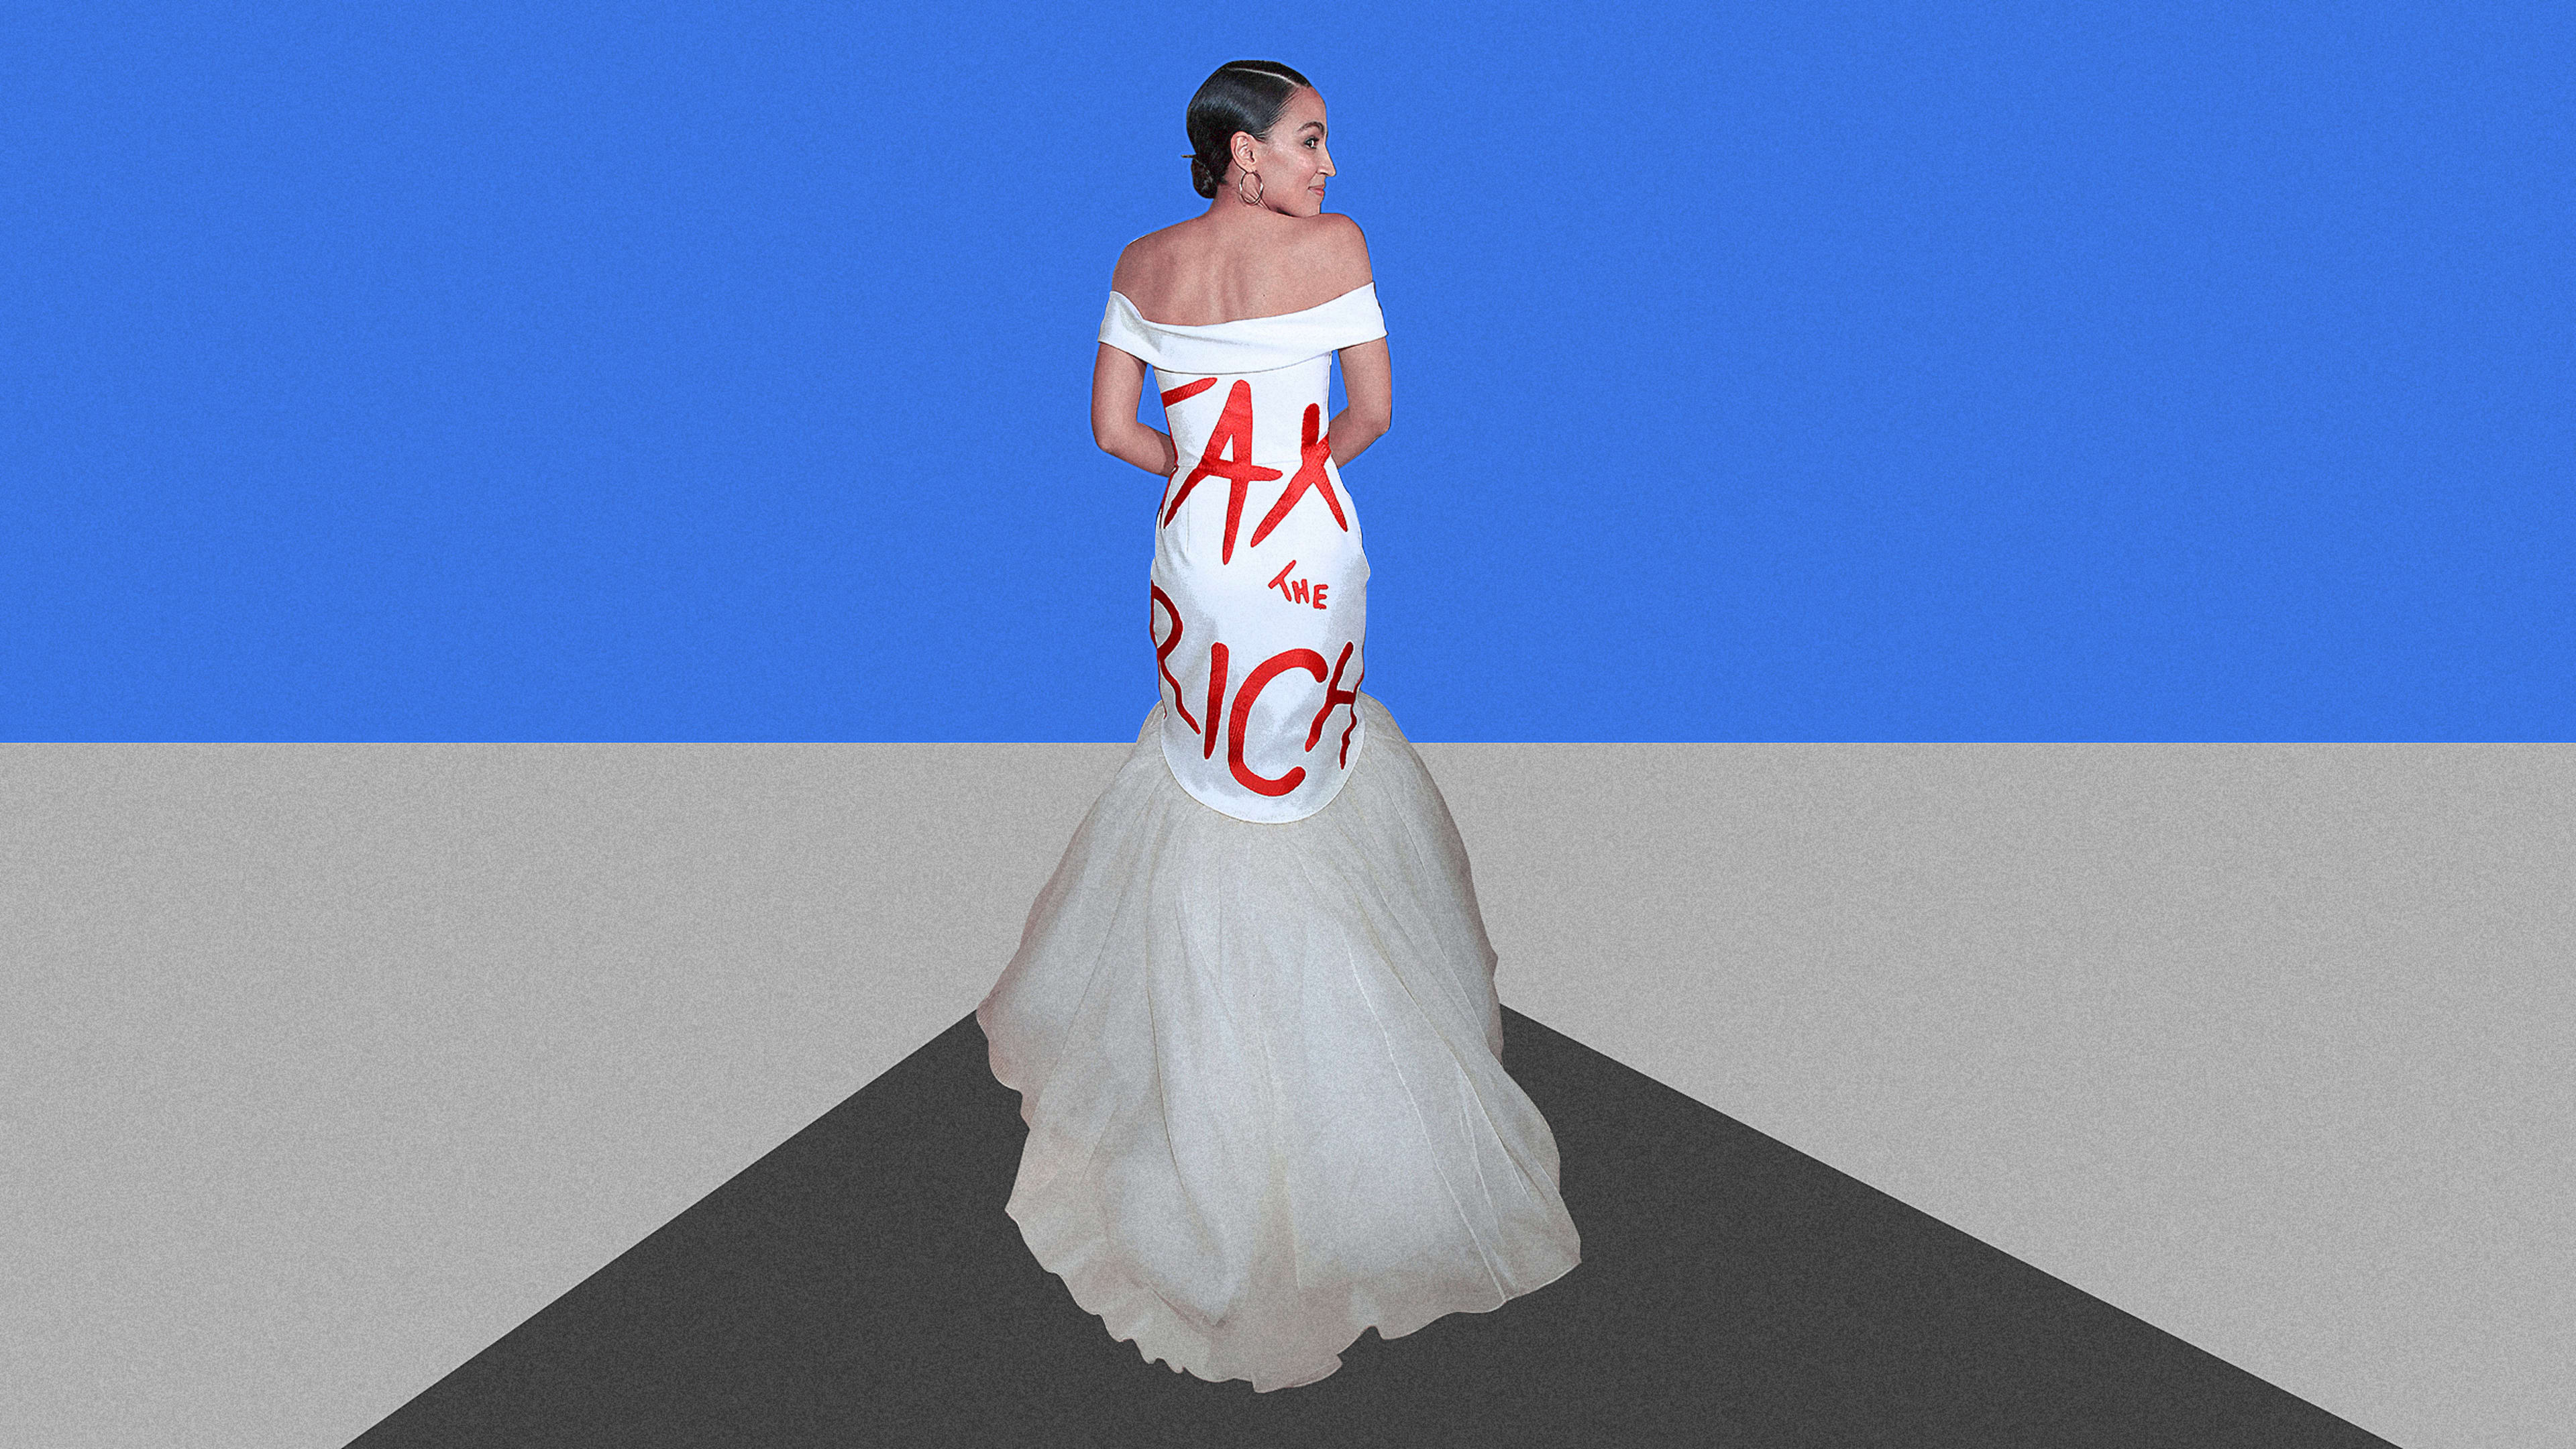 Meet the visionary designer behind AOC’s Tax the Rich dress